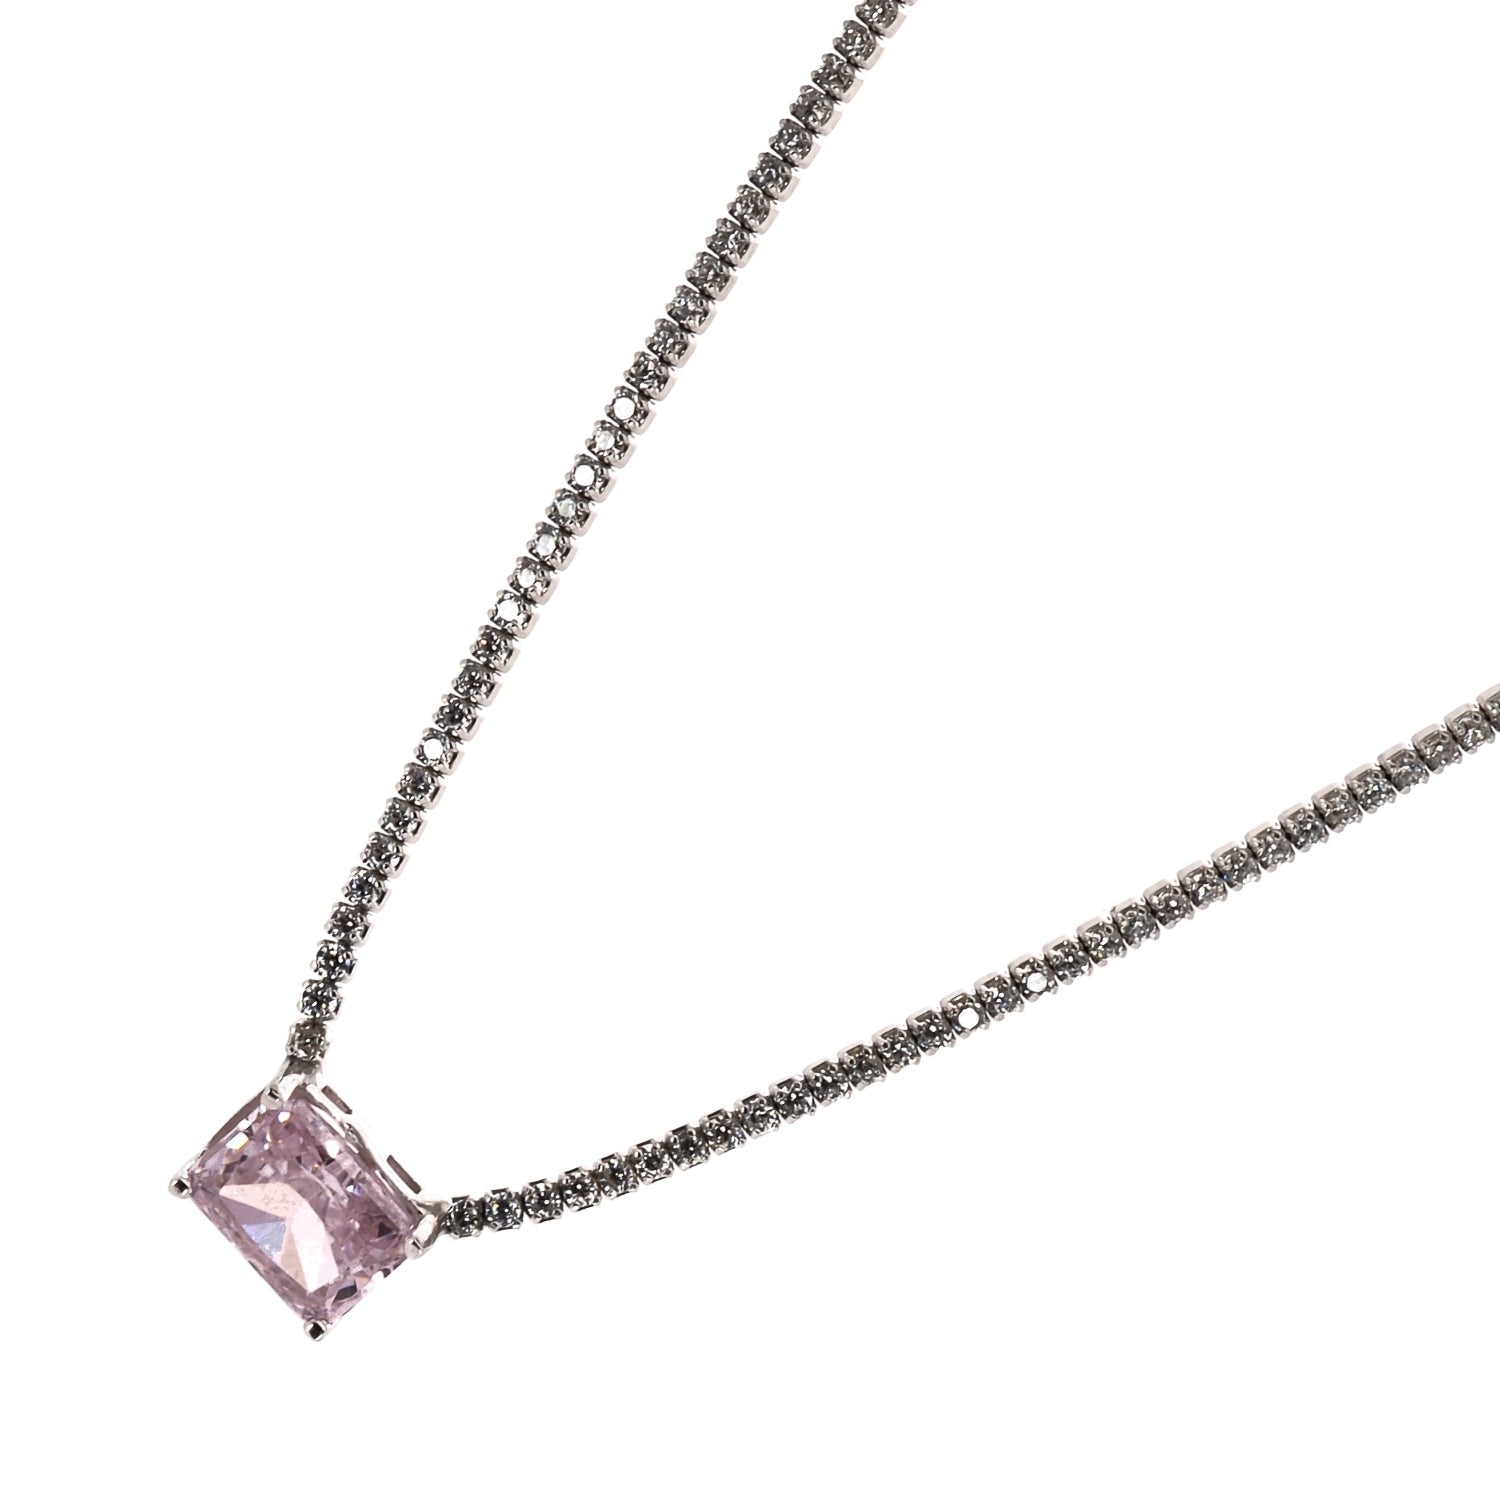 Eternal Bond of Love: Pink Quartz Sterling Silver Fashion Necklace